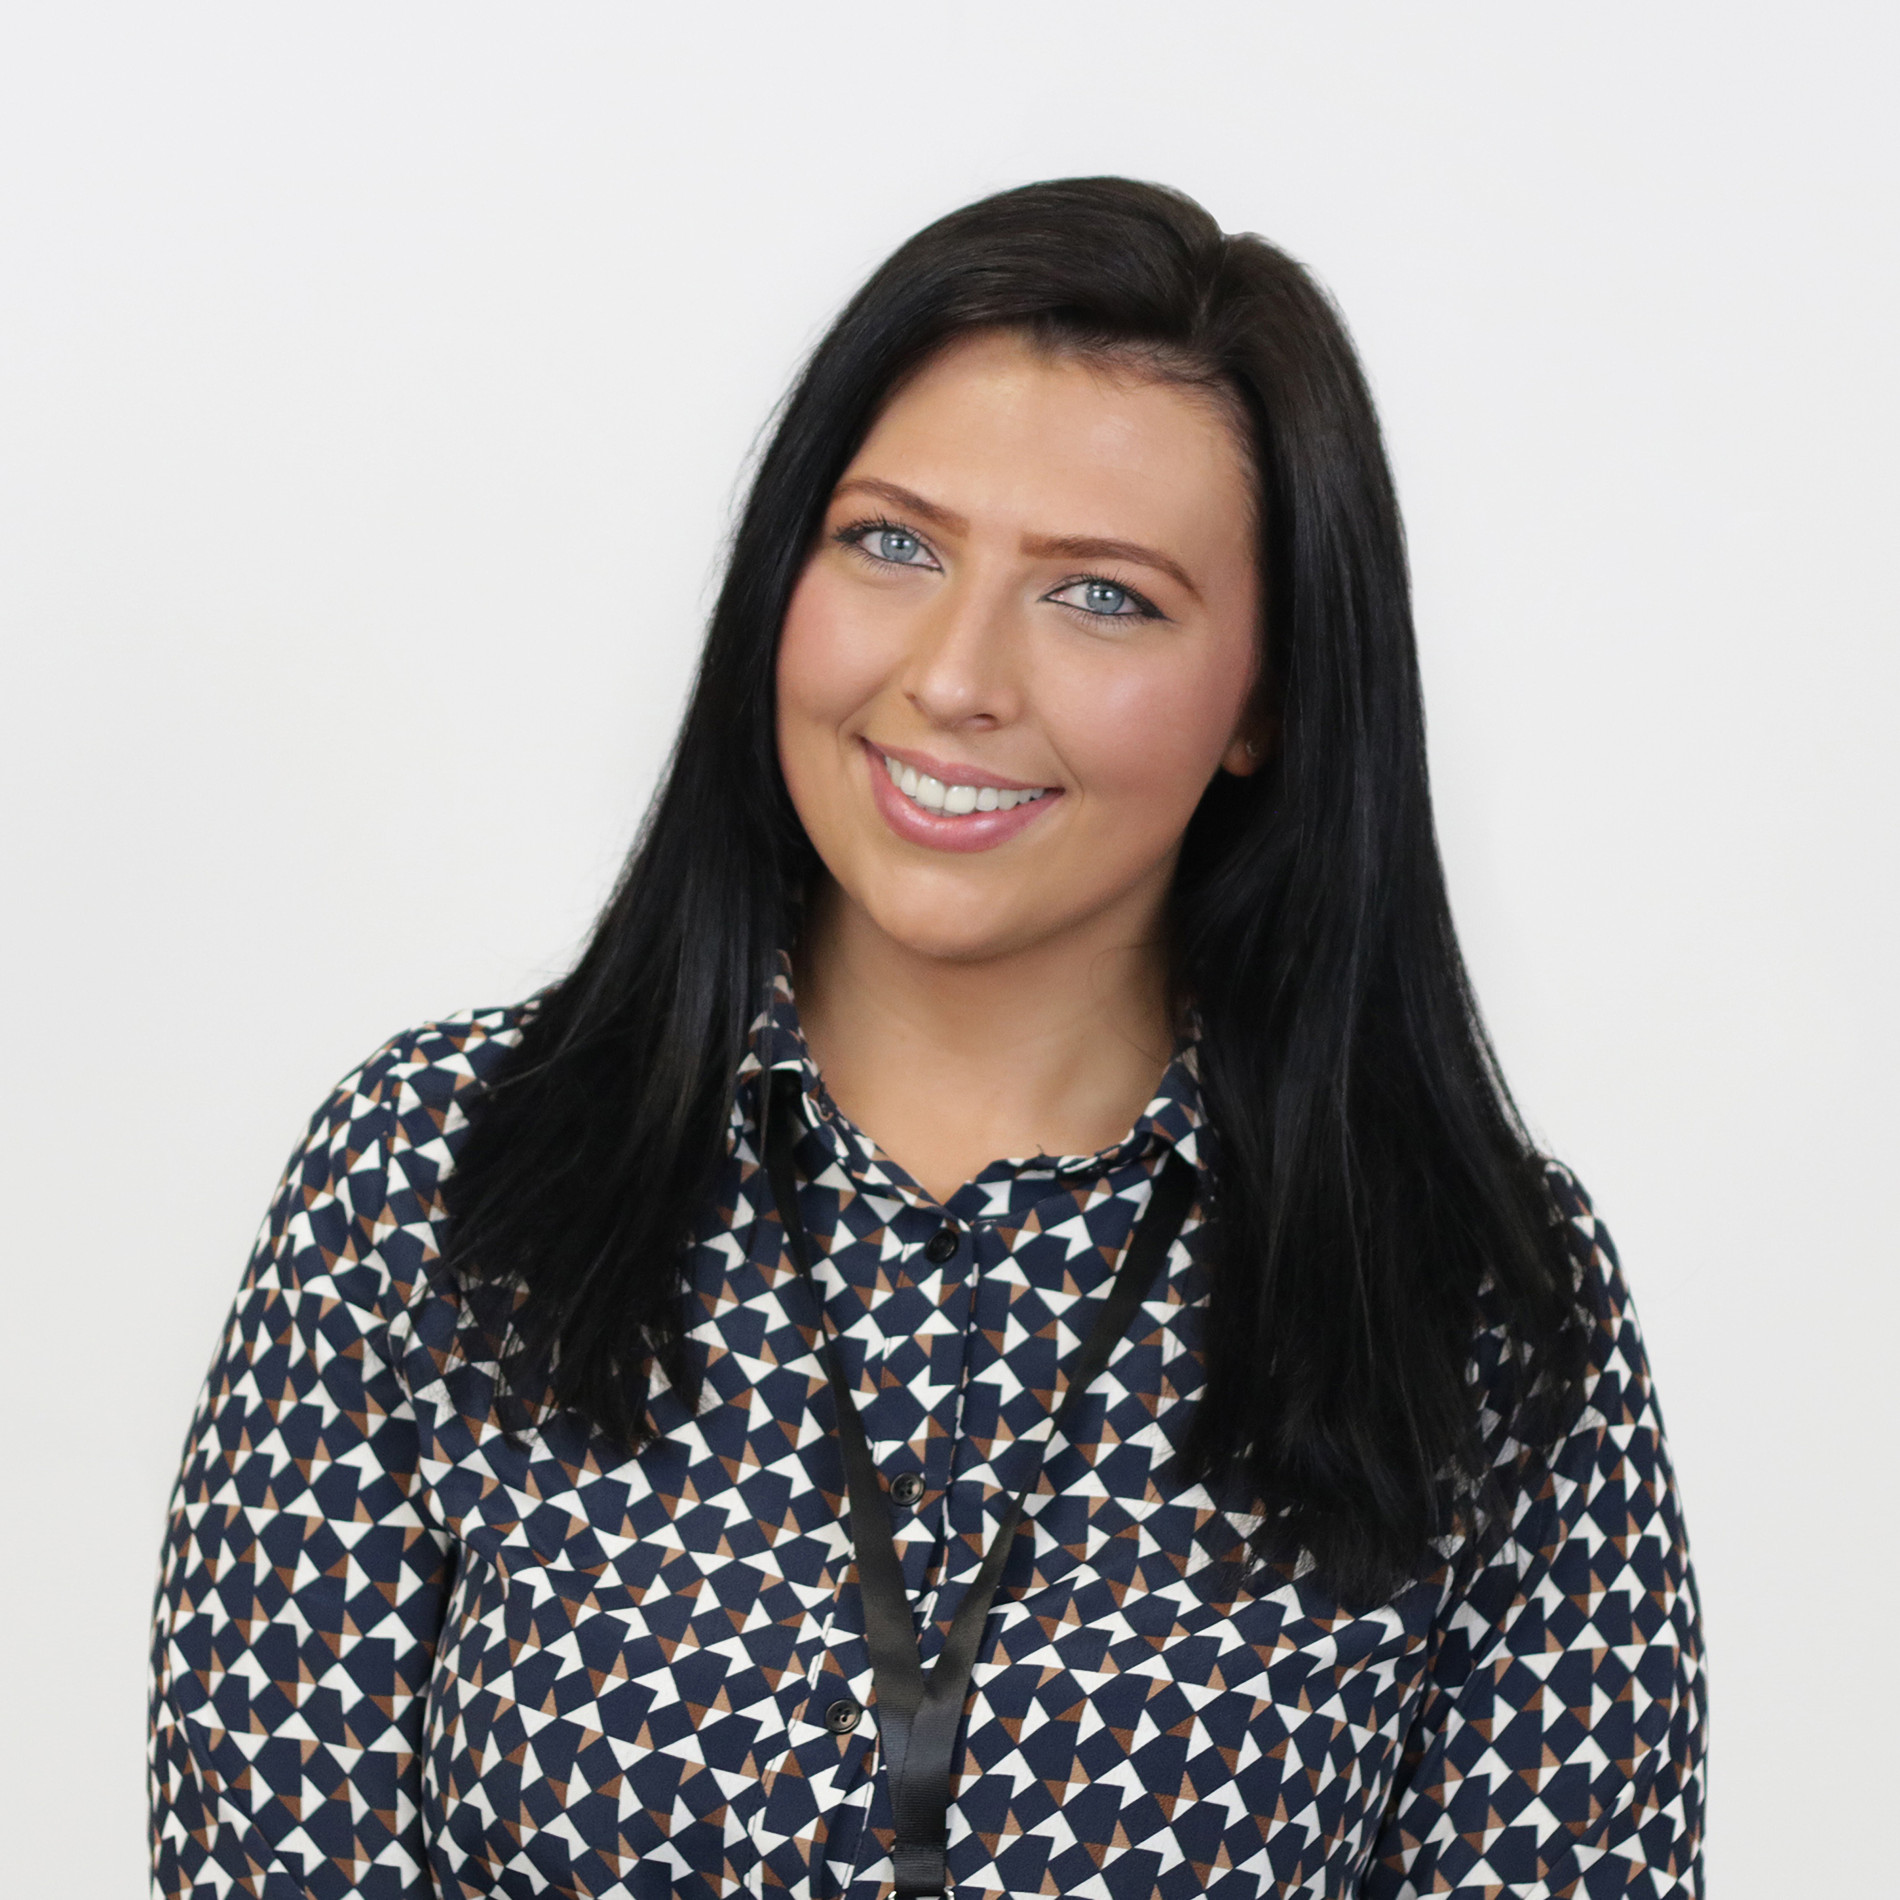 Charlotte Quick, HR Business Partner at Gleeson Recruitment Group